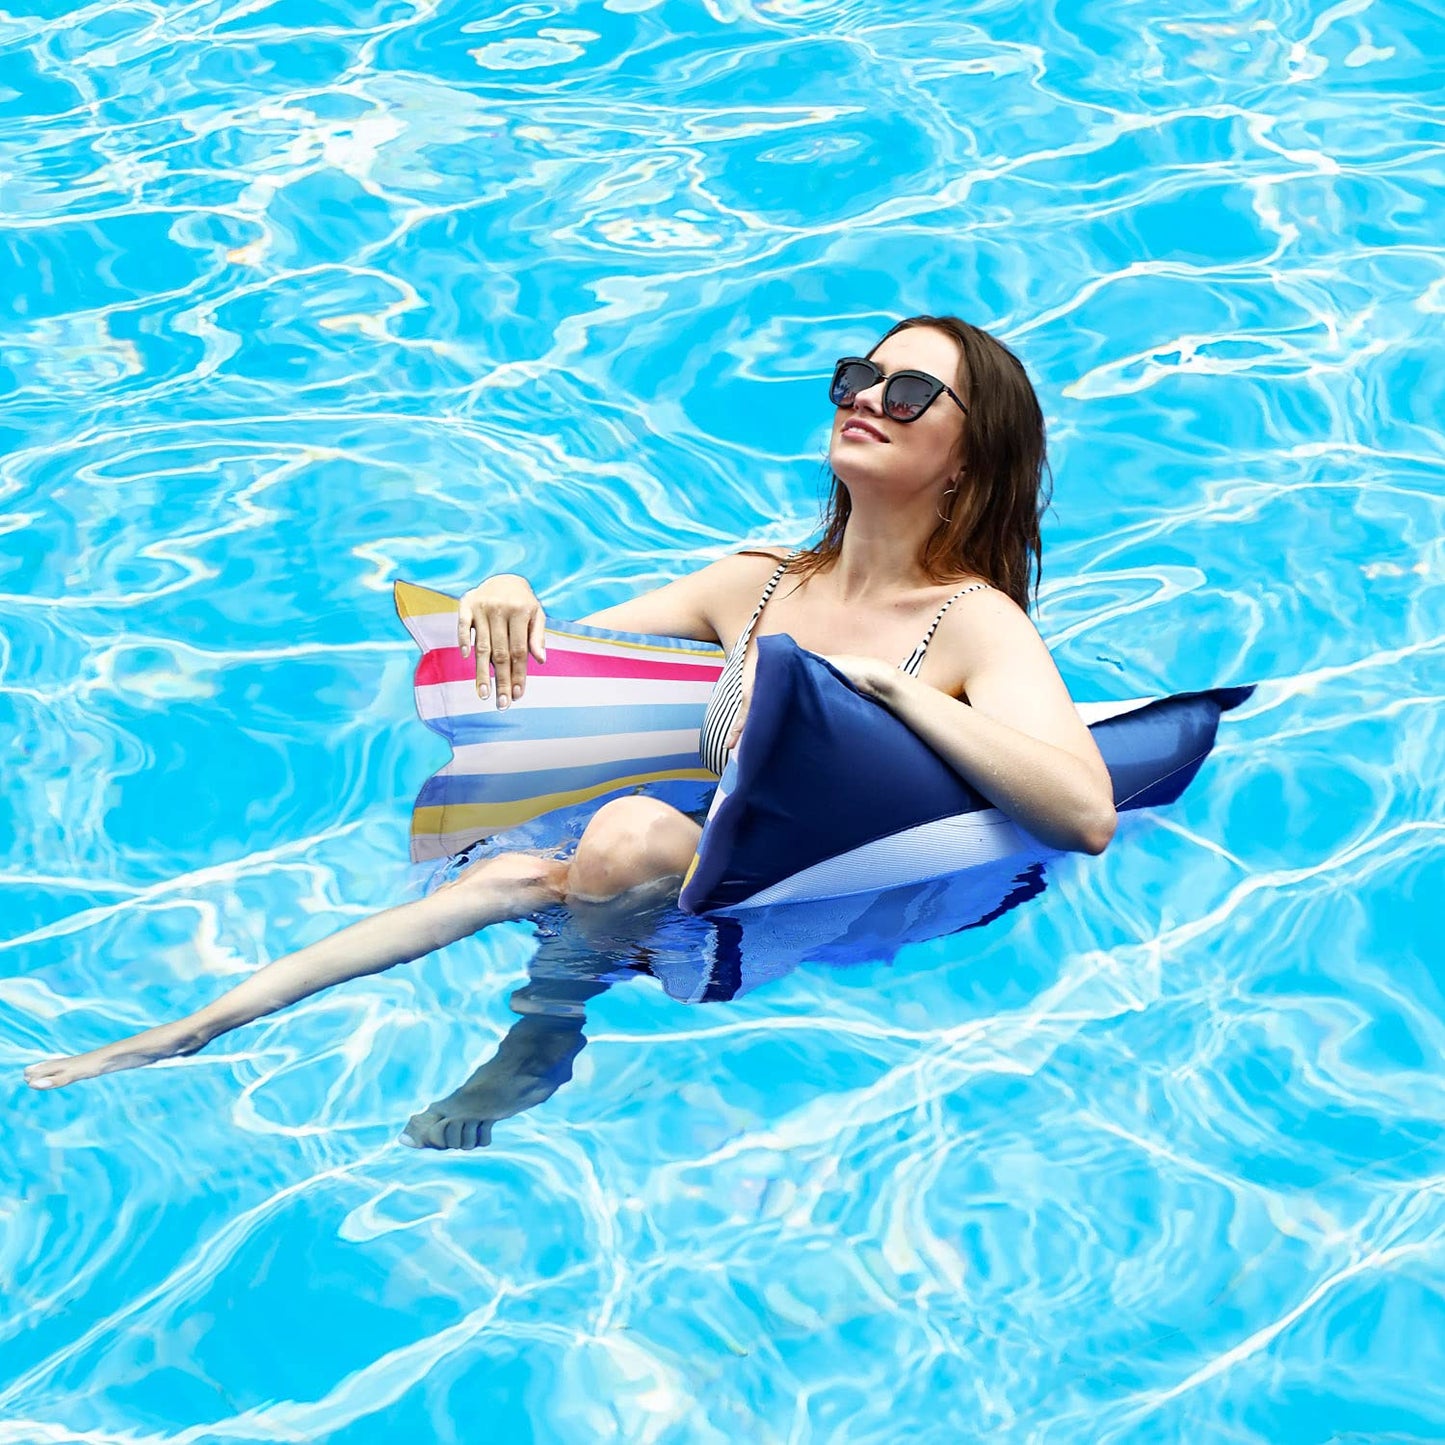 FindUWill Fabric Pool Hammock Floats, XL, 2Pack Inflatable Water Hammocks Floaties 4-in-1 (Saddle, Lounge Chair, Hammock, Drifter), Pool Float Lounger for Adults 01Rainbow&Kanagawa